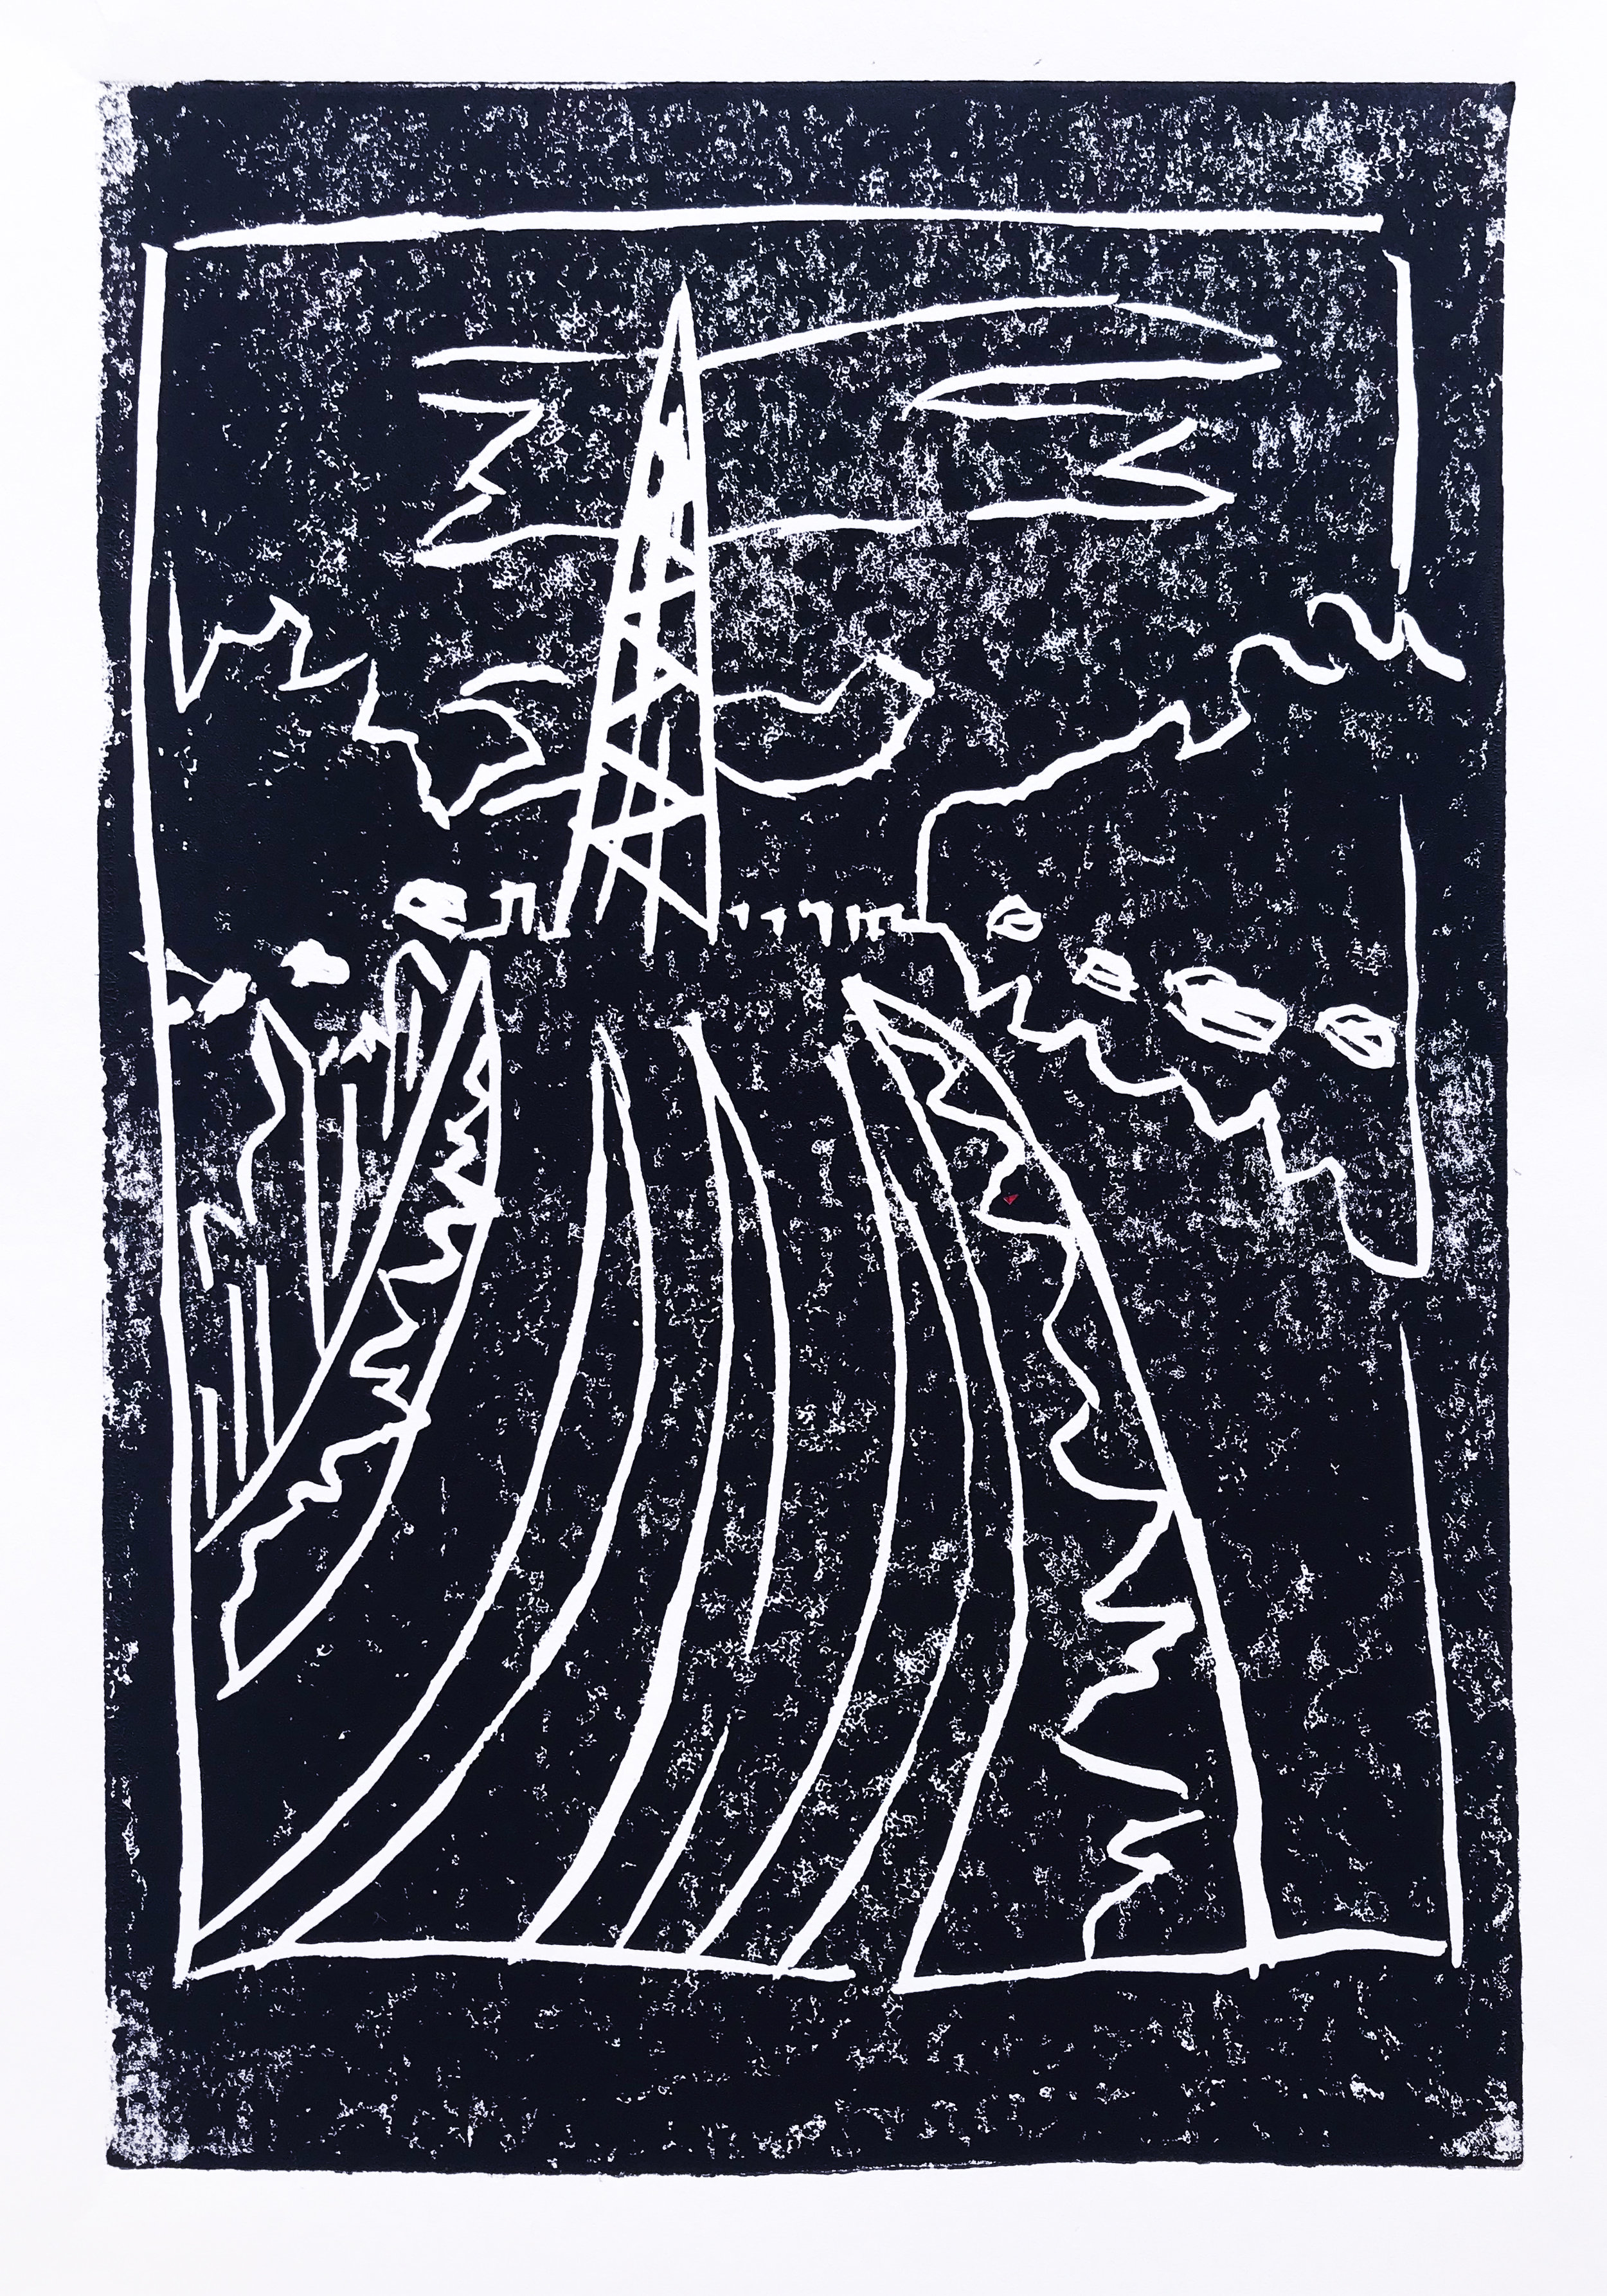 The Mast, 2019, linoprint on paper, 20 x 15 cm 